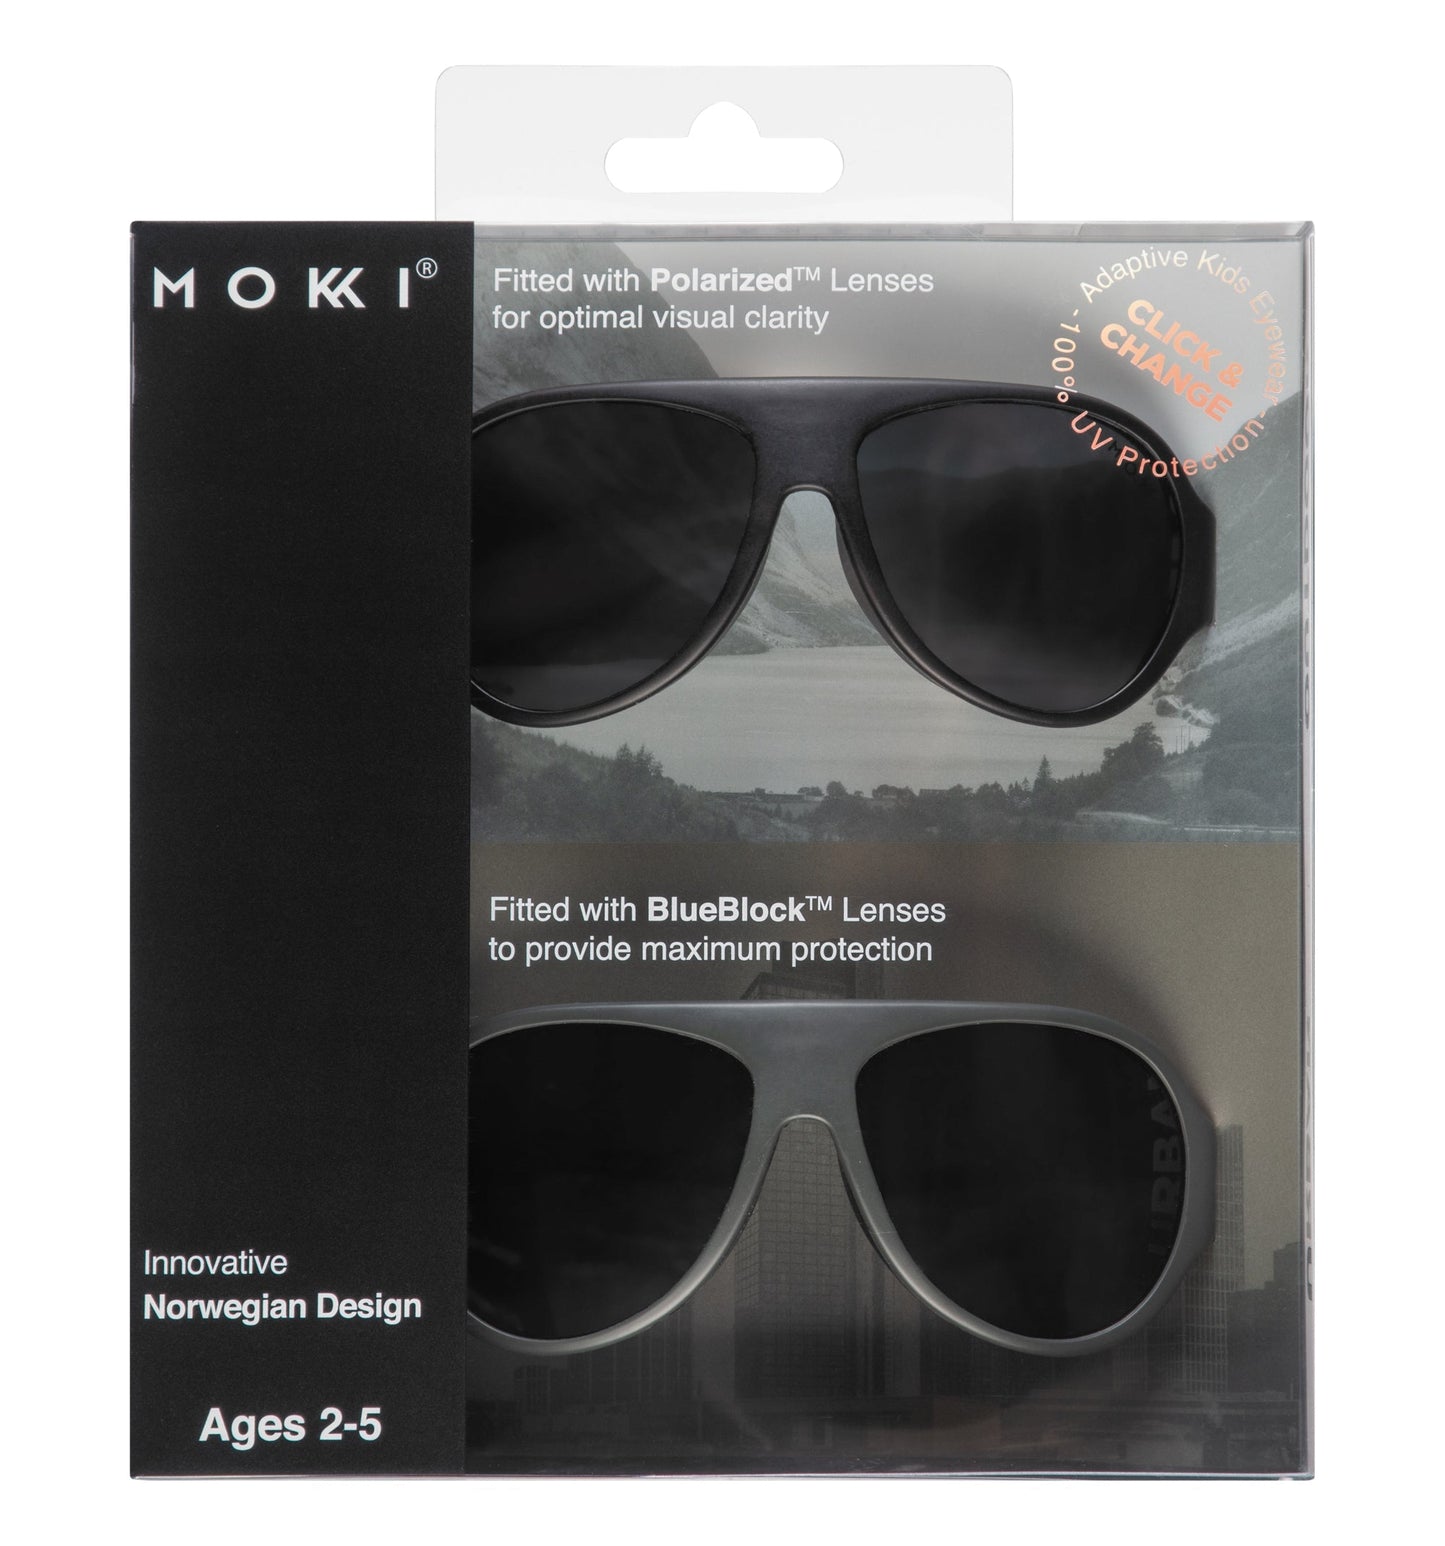 Mokki Click & Change-sunglasses for kids ages 2-5 in black